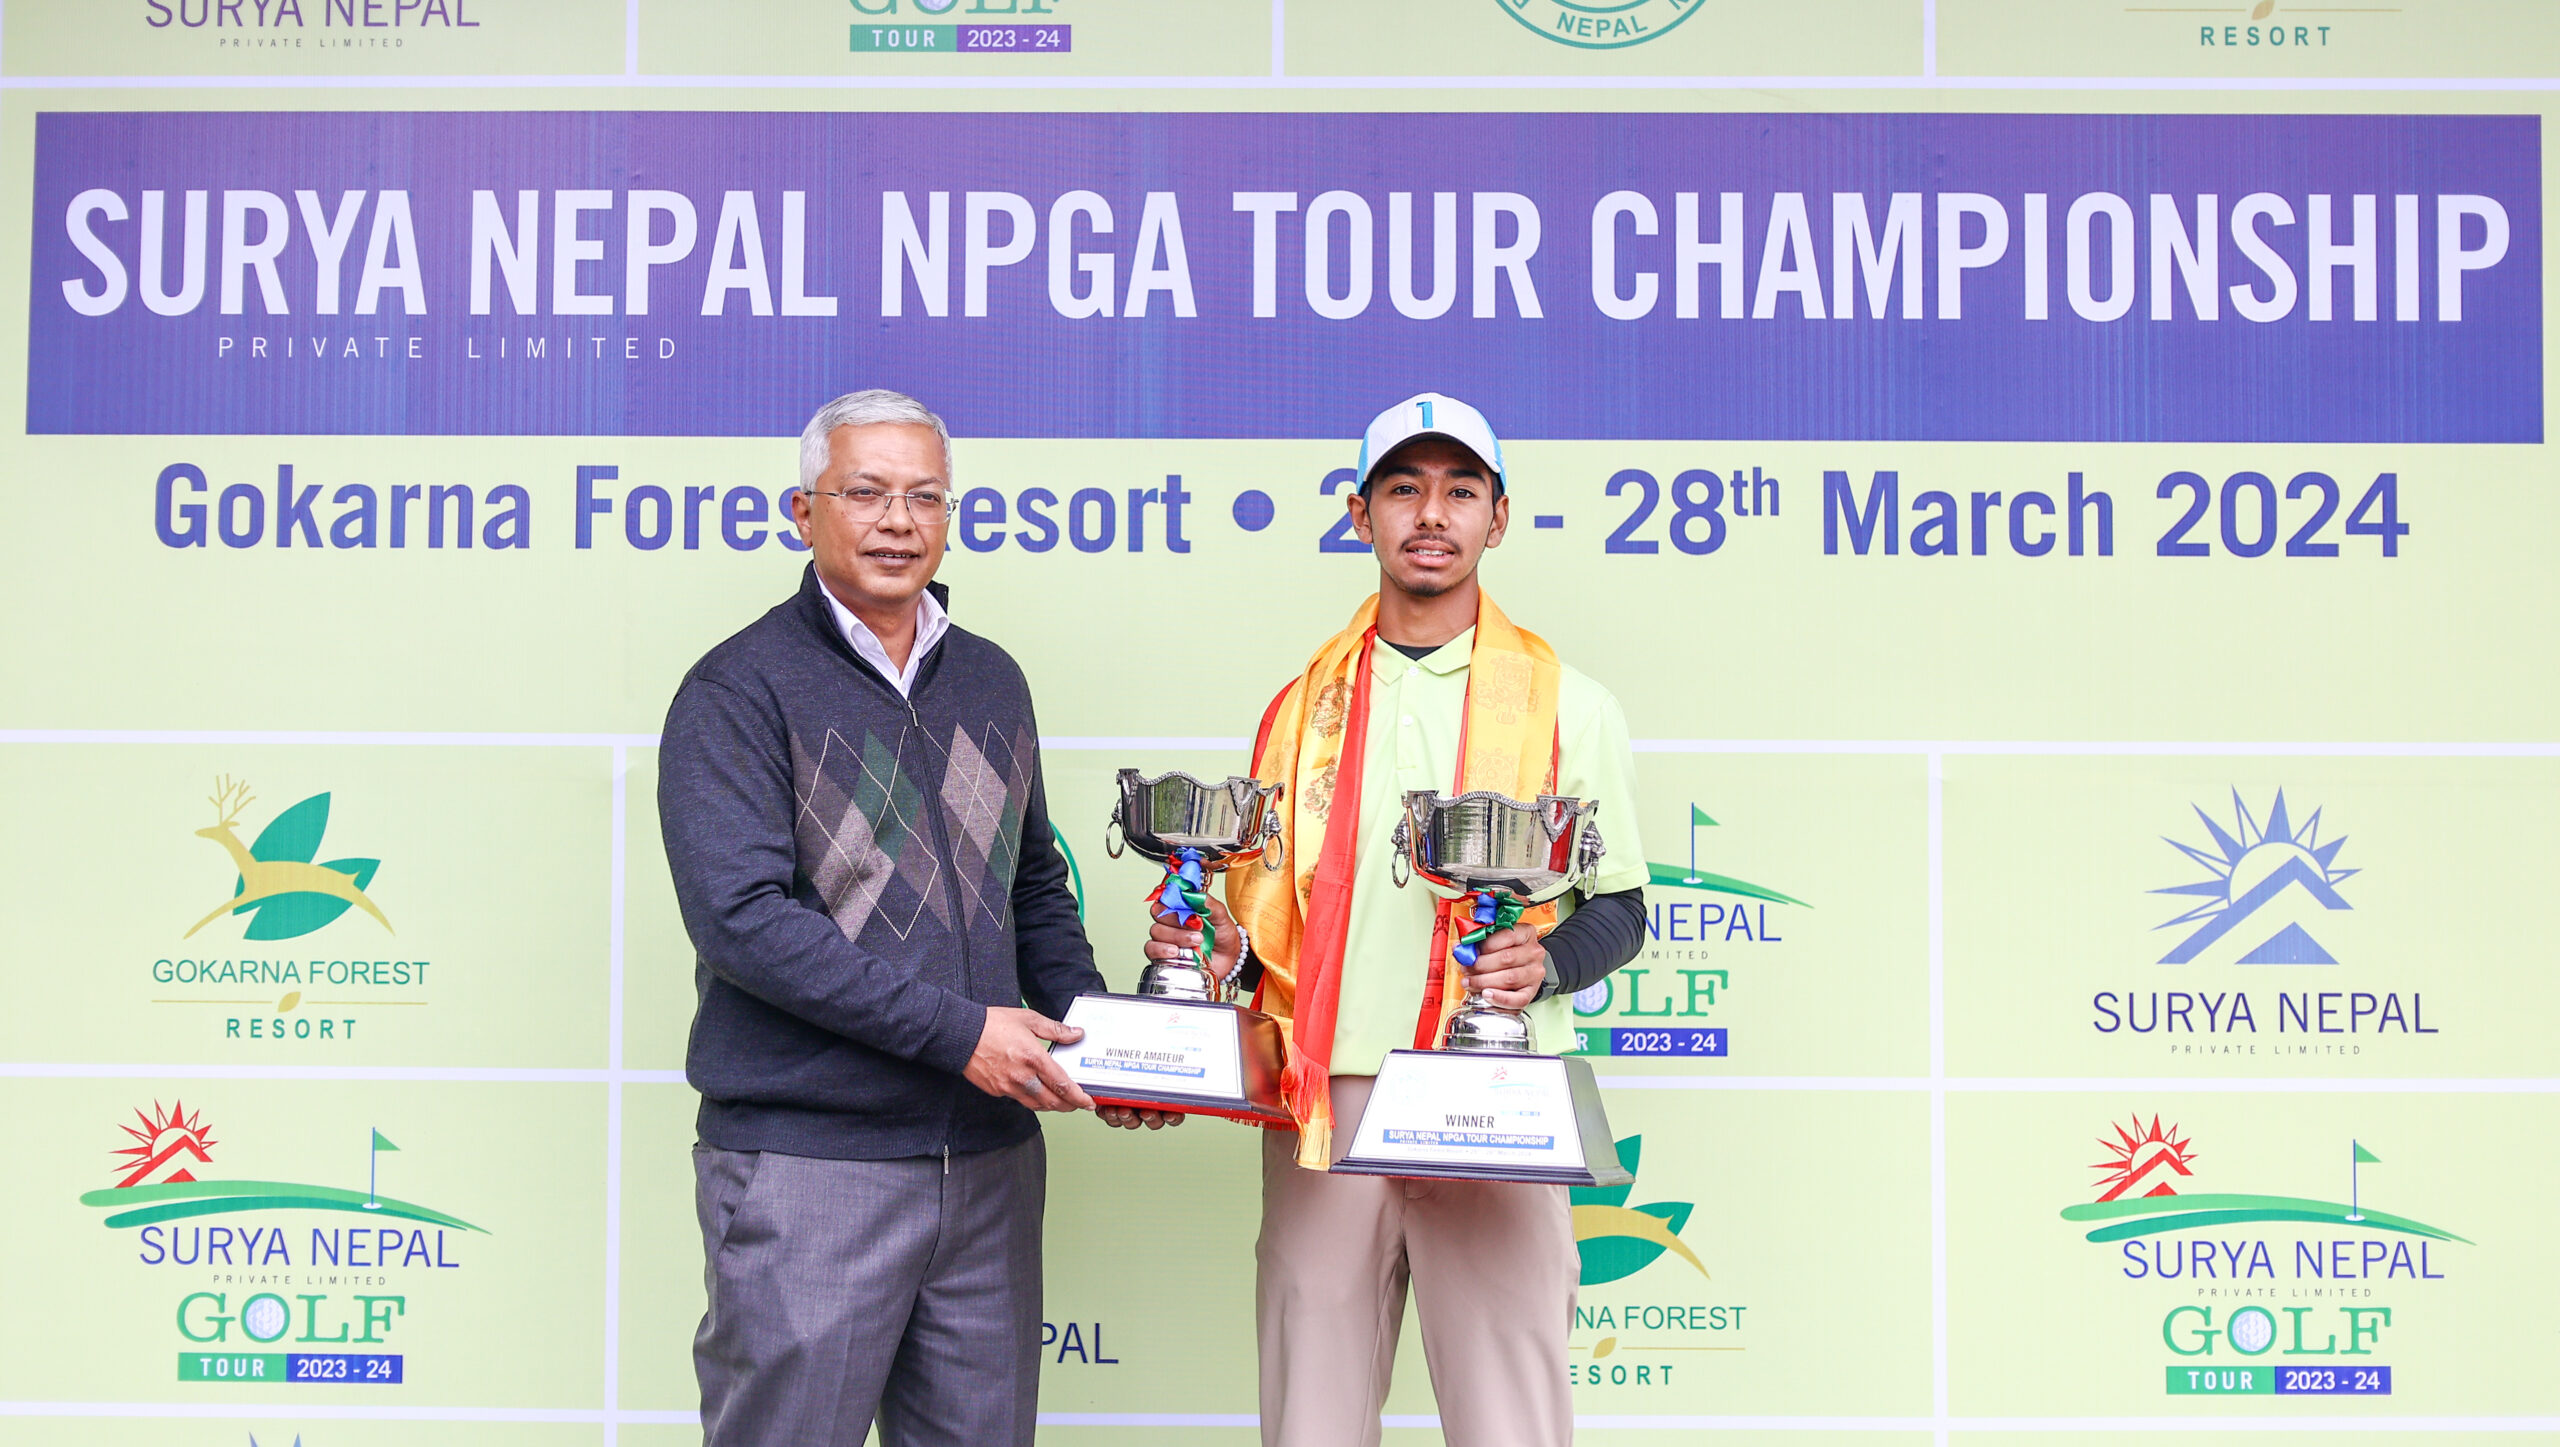 Surya Nepal NPGA Tour Championship: Amateur Sadbhav registers seven-stroke victory over pro Bhuvan